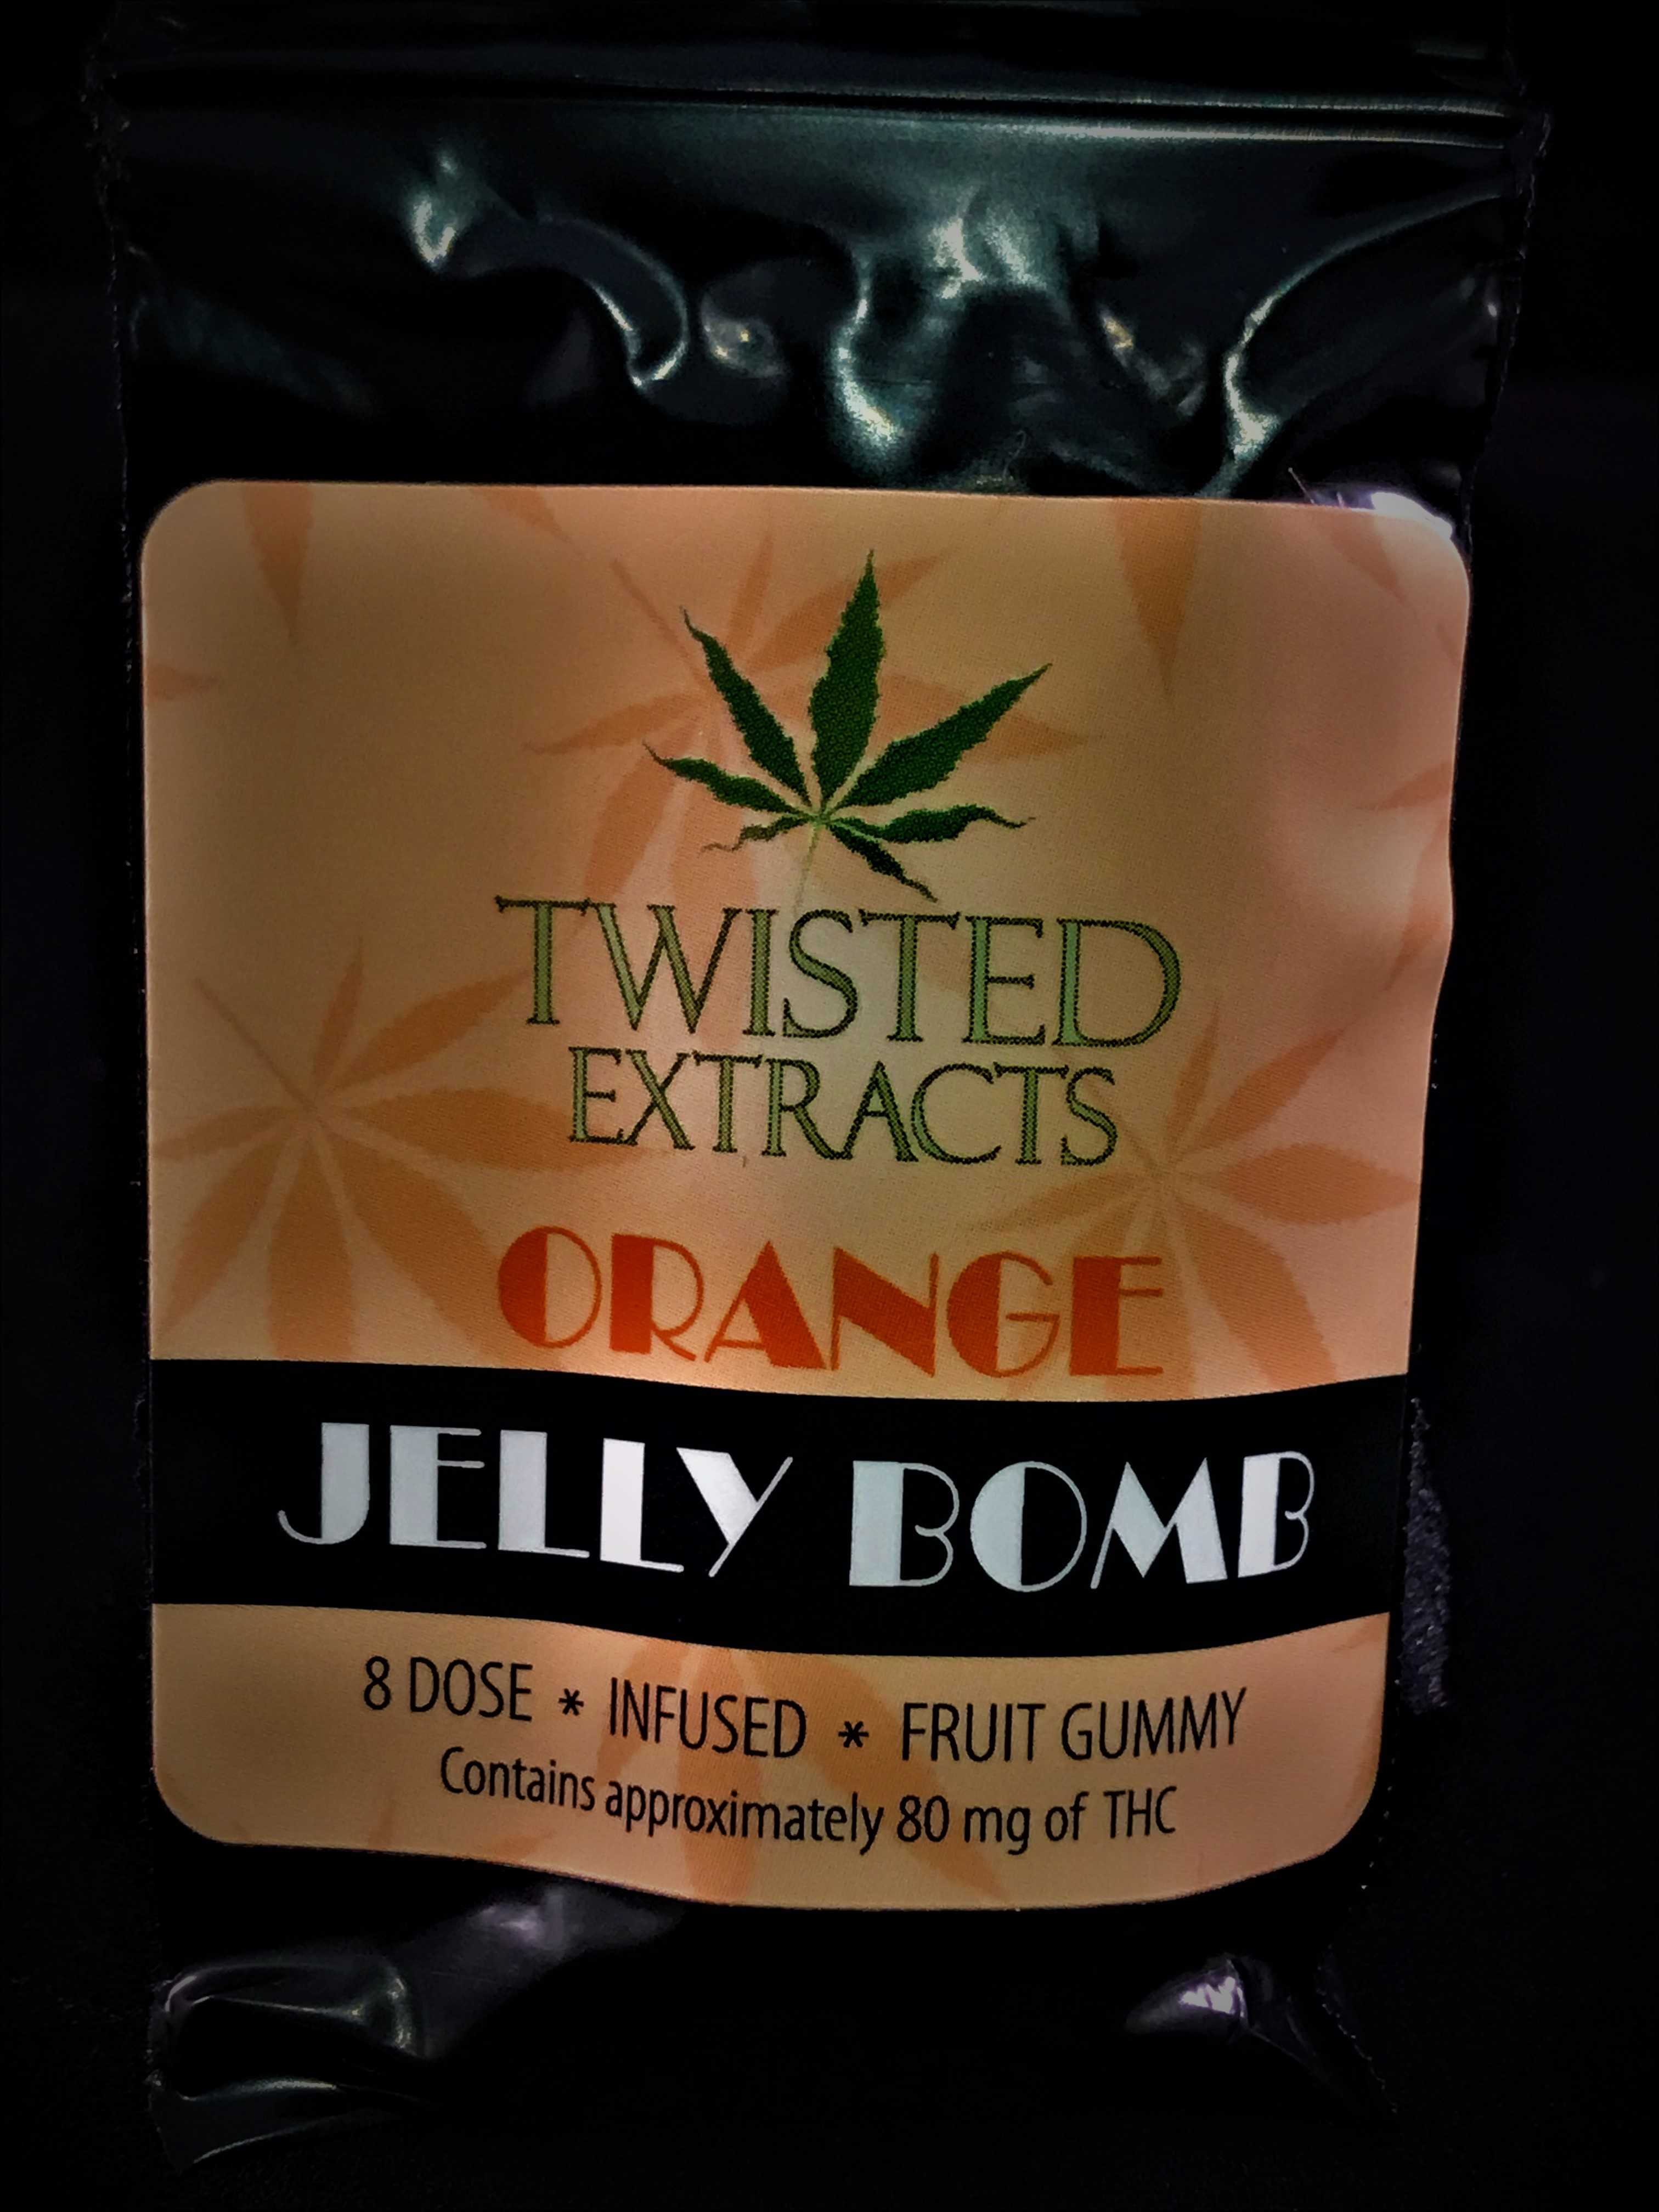 grass-jellybomb-orange